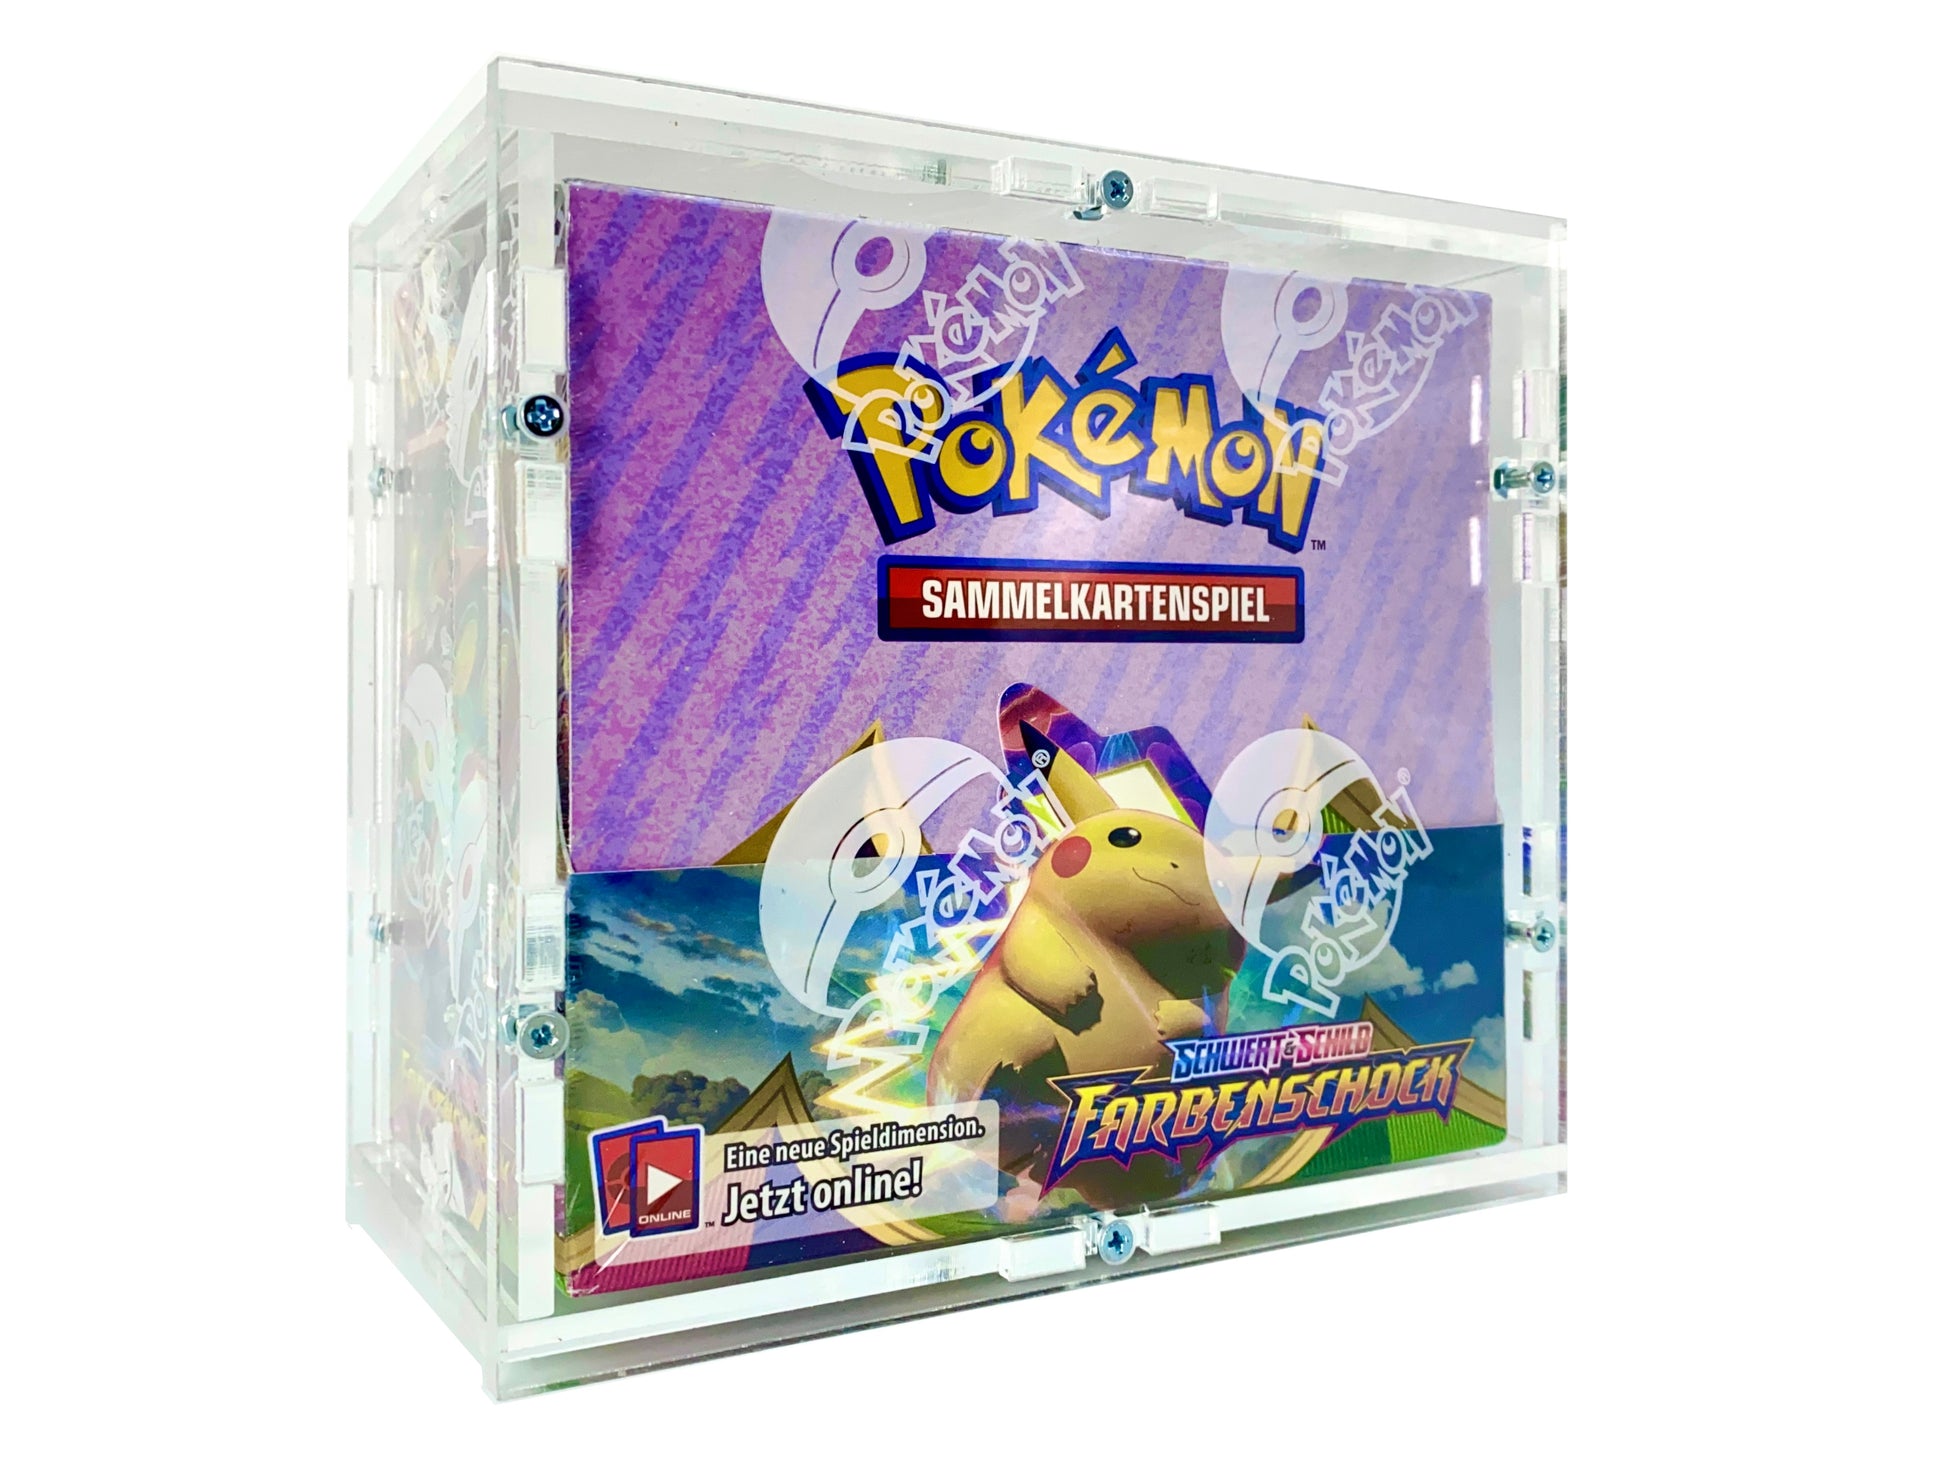 Pokemon 151 Custom Box – 36x Booster Packs w/ Acrylic - TCA Gaming